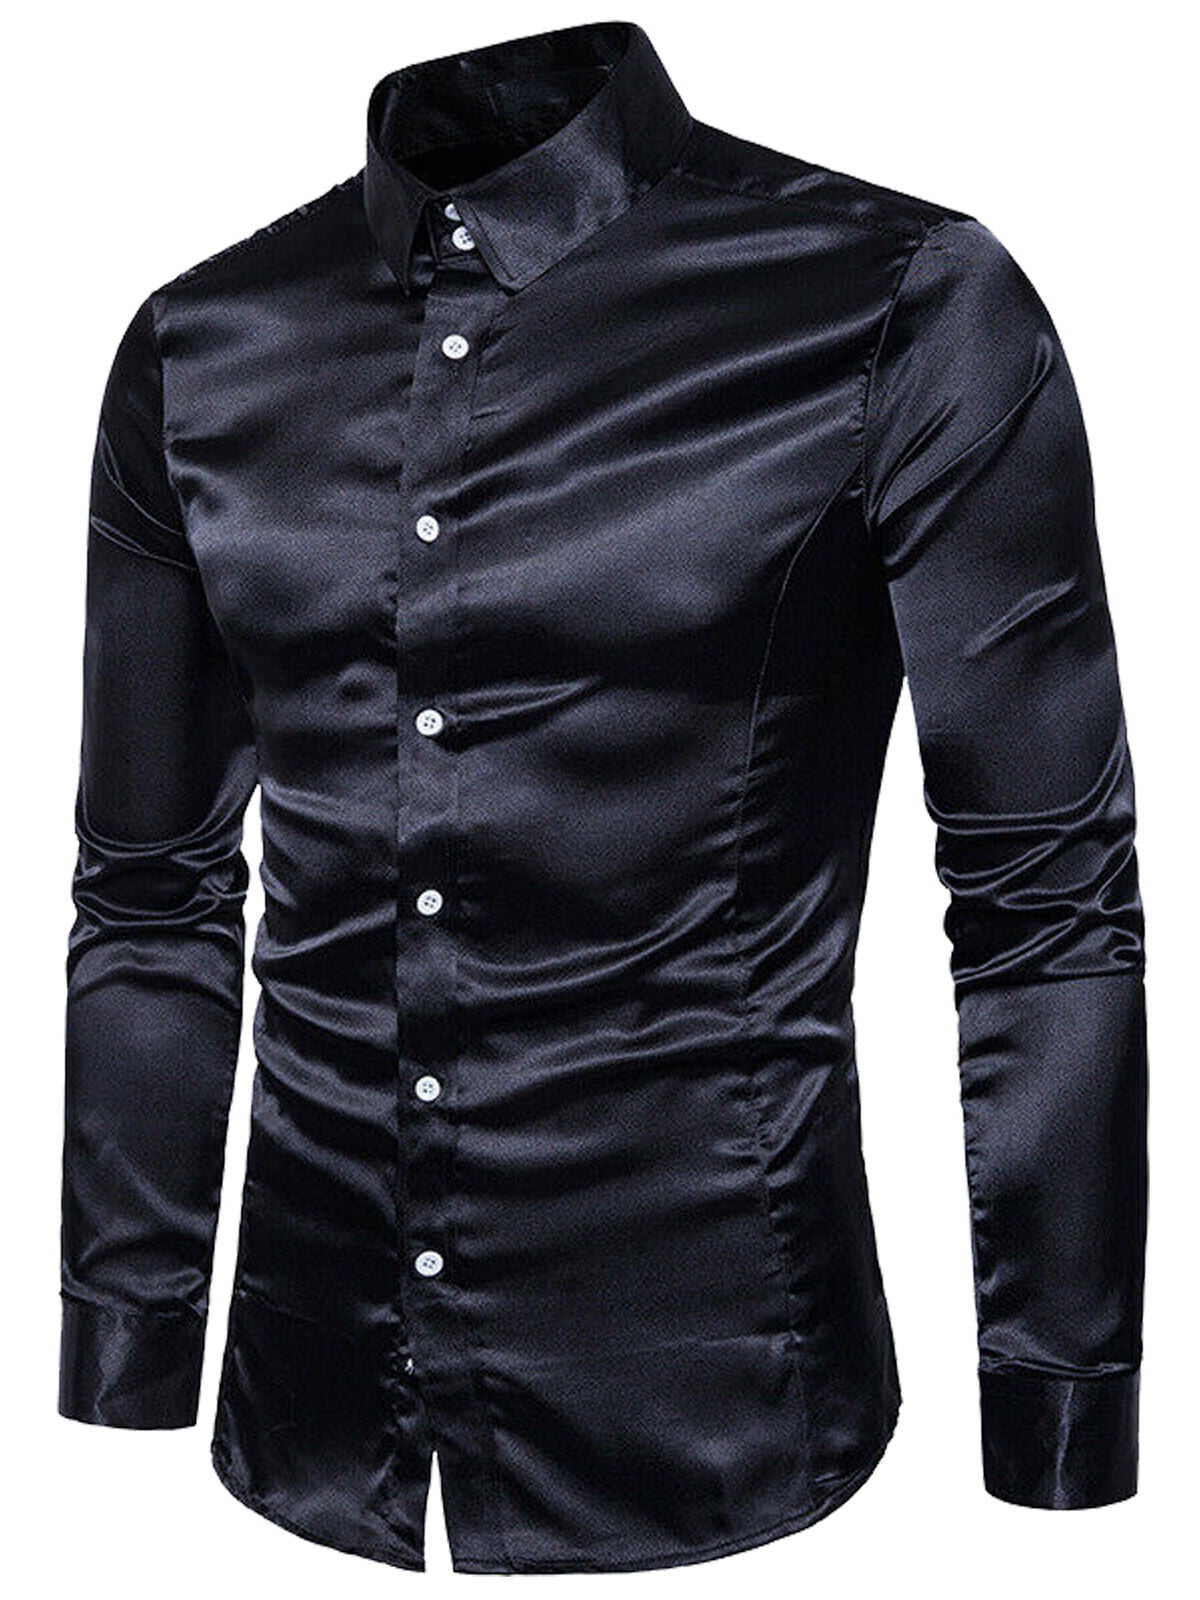 Black formal dress shirt